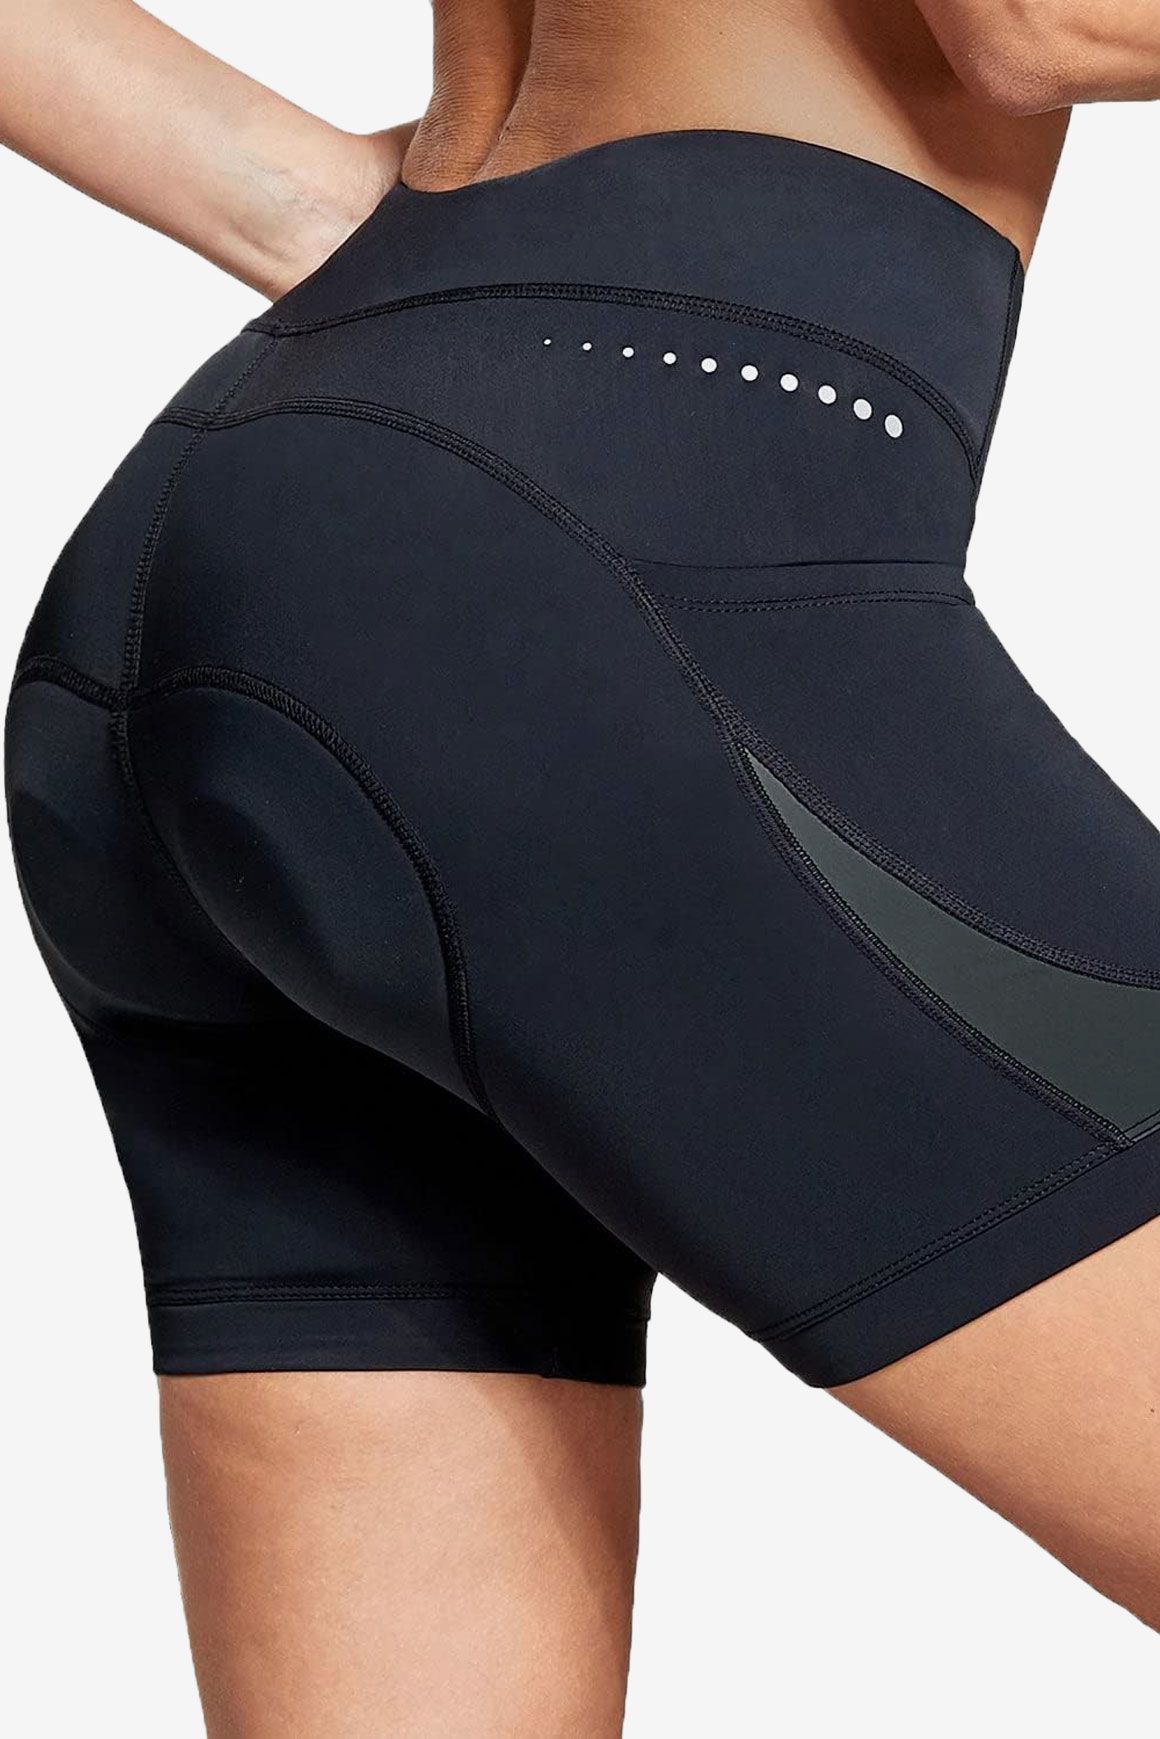 Baleaf womens medium black cycling pants capri padded crotch medium